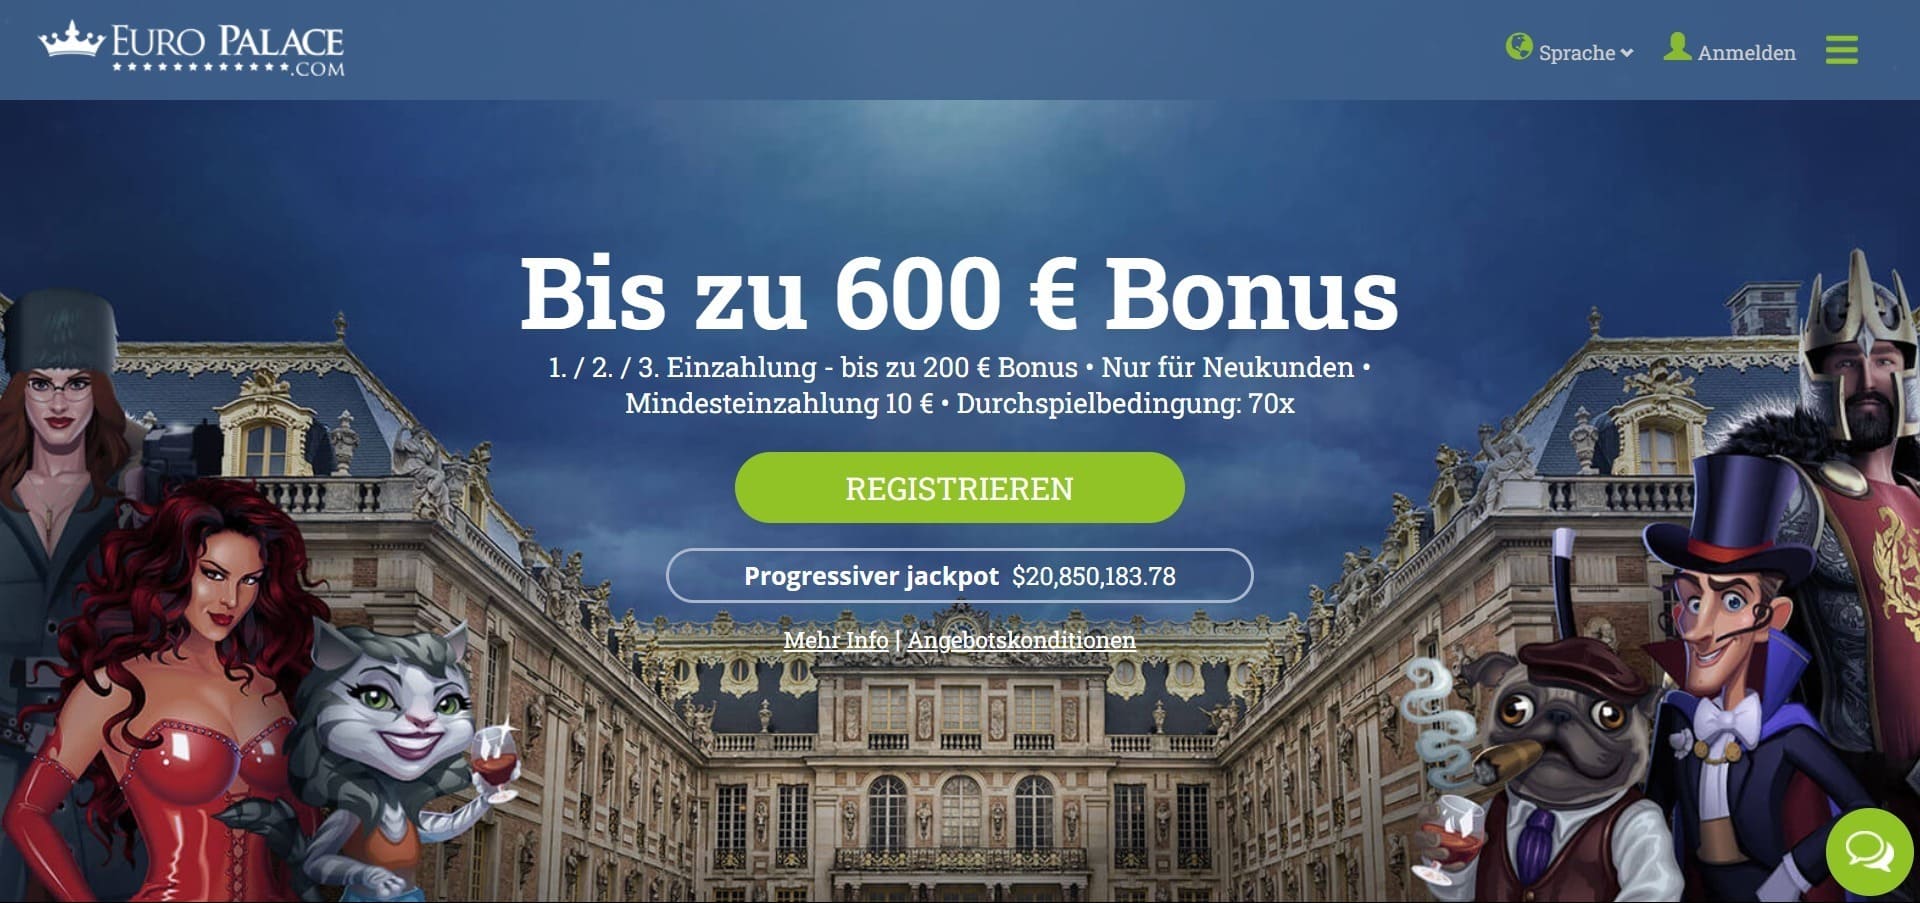 Offizielle Website der Euro Palace Casino